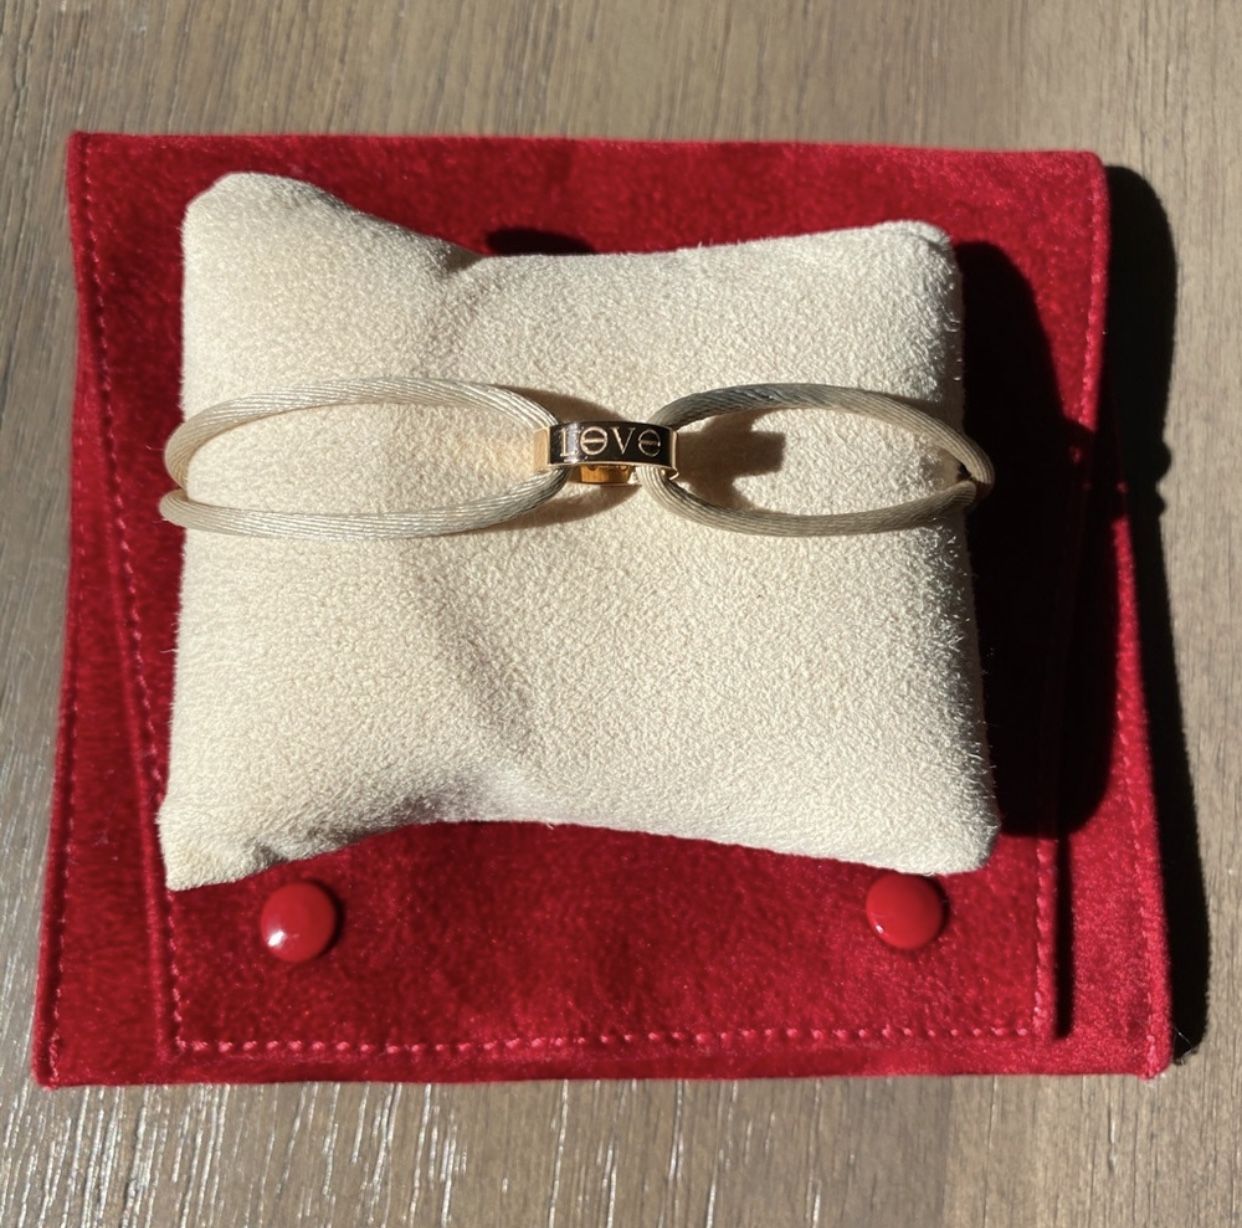 RARE Authentic Cartier 18k Rose Gold Charity Cord Bracelet.